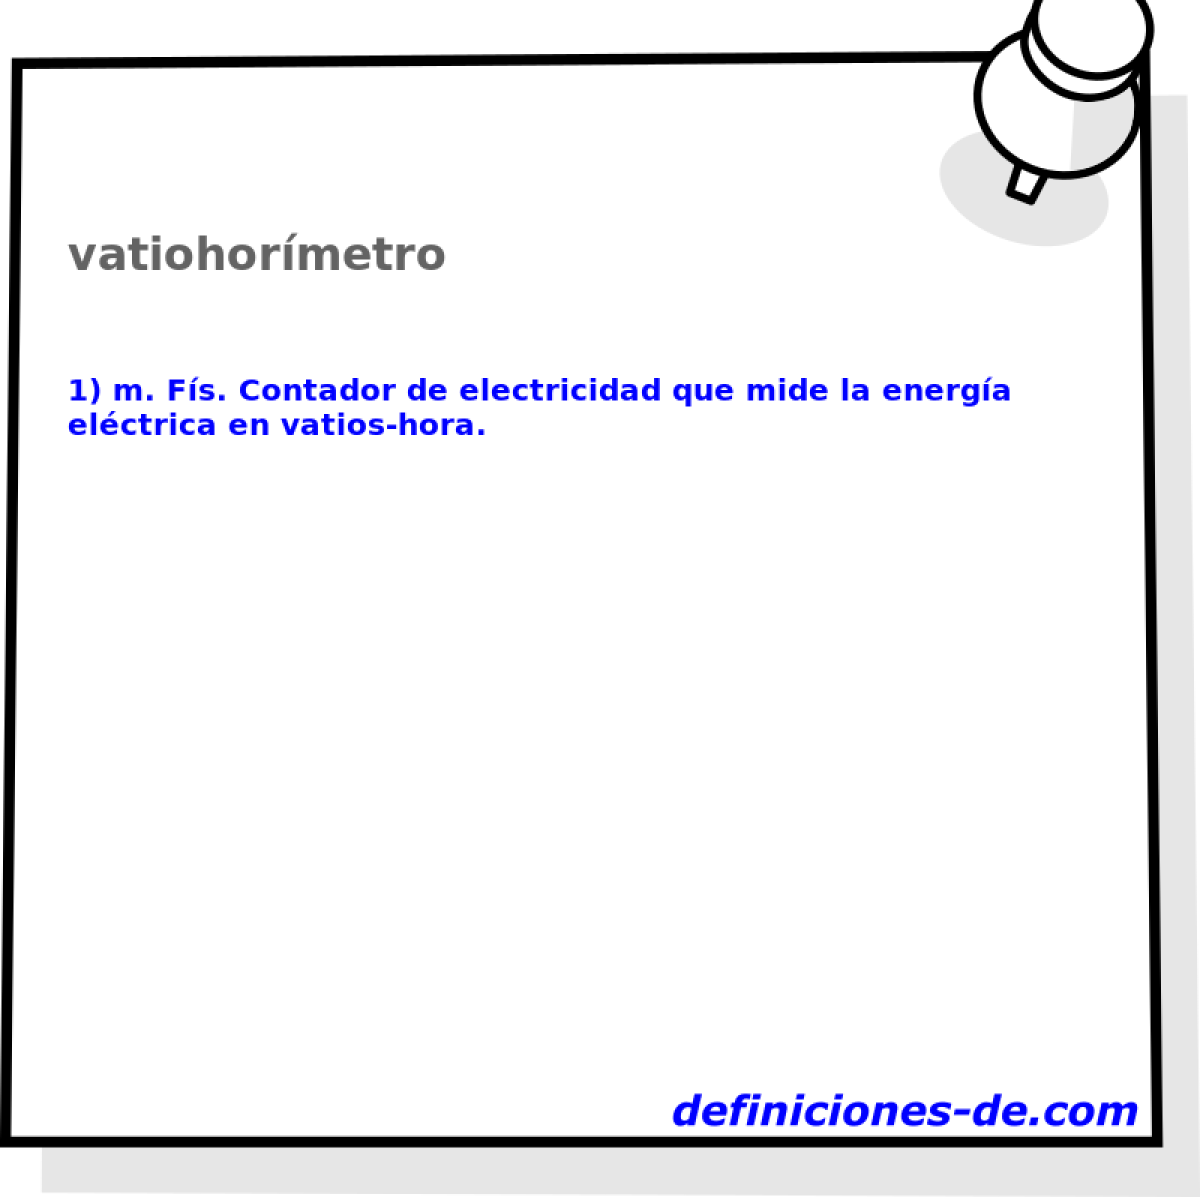 vatiohormetro 